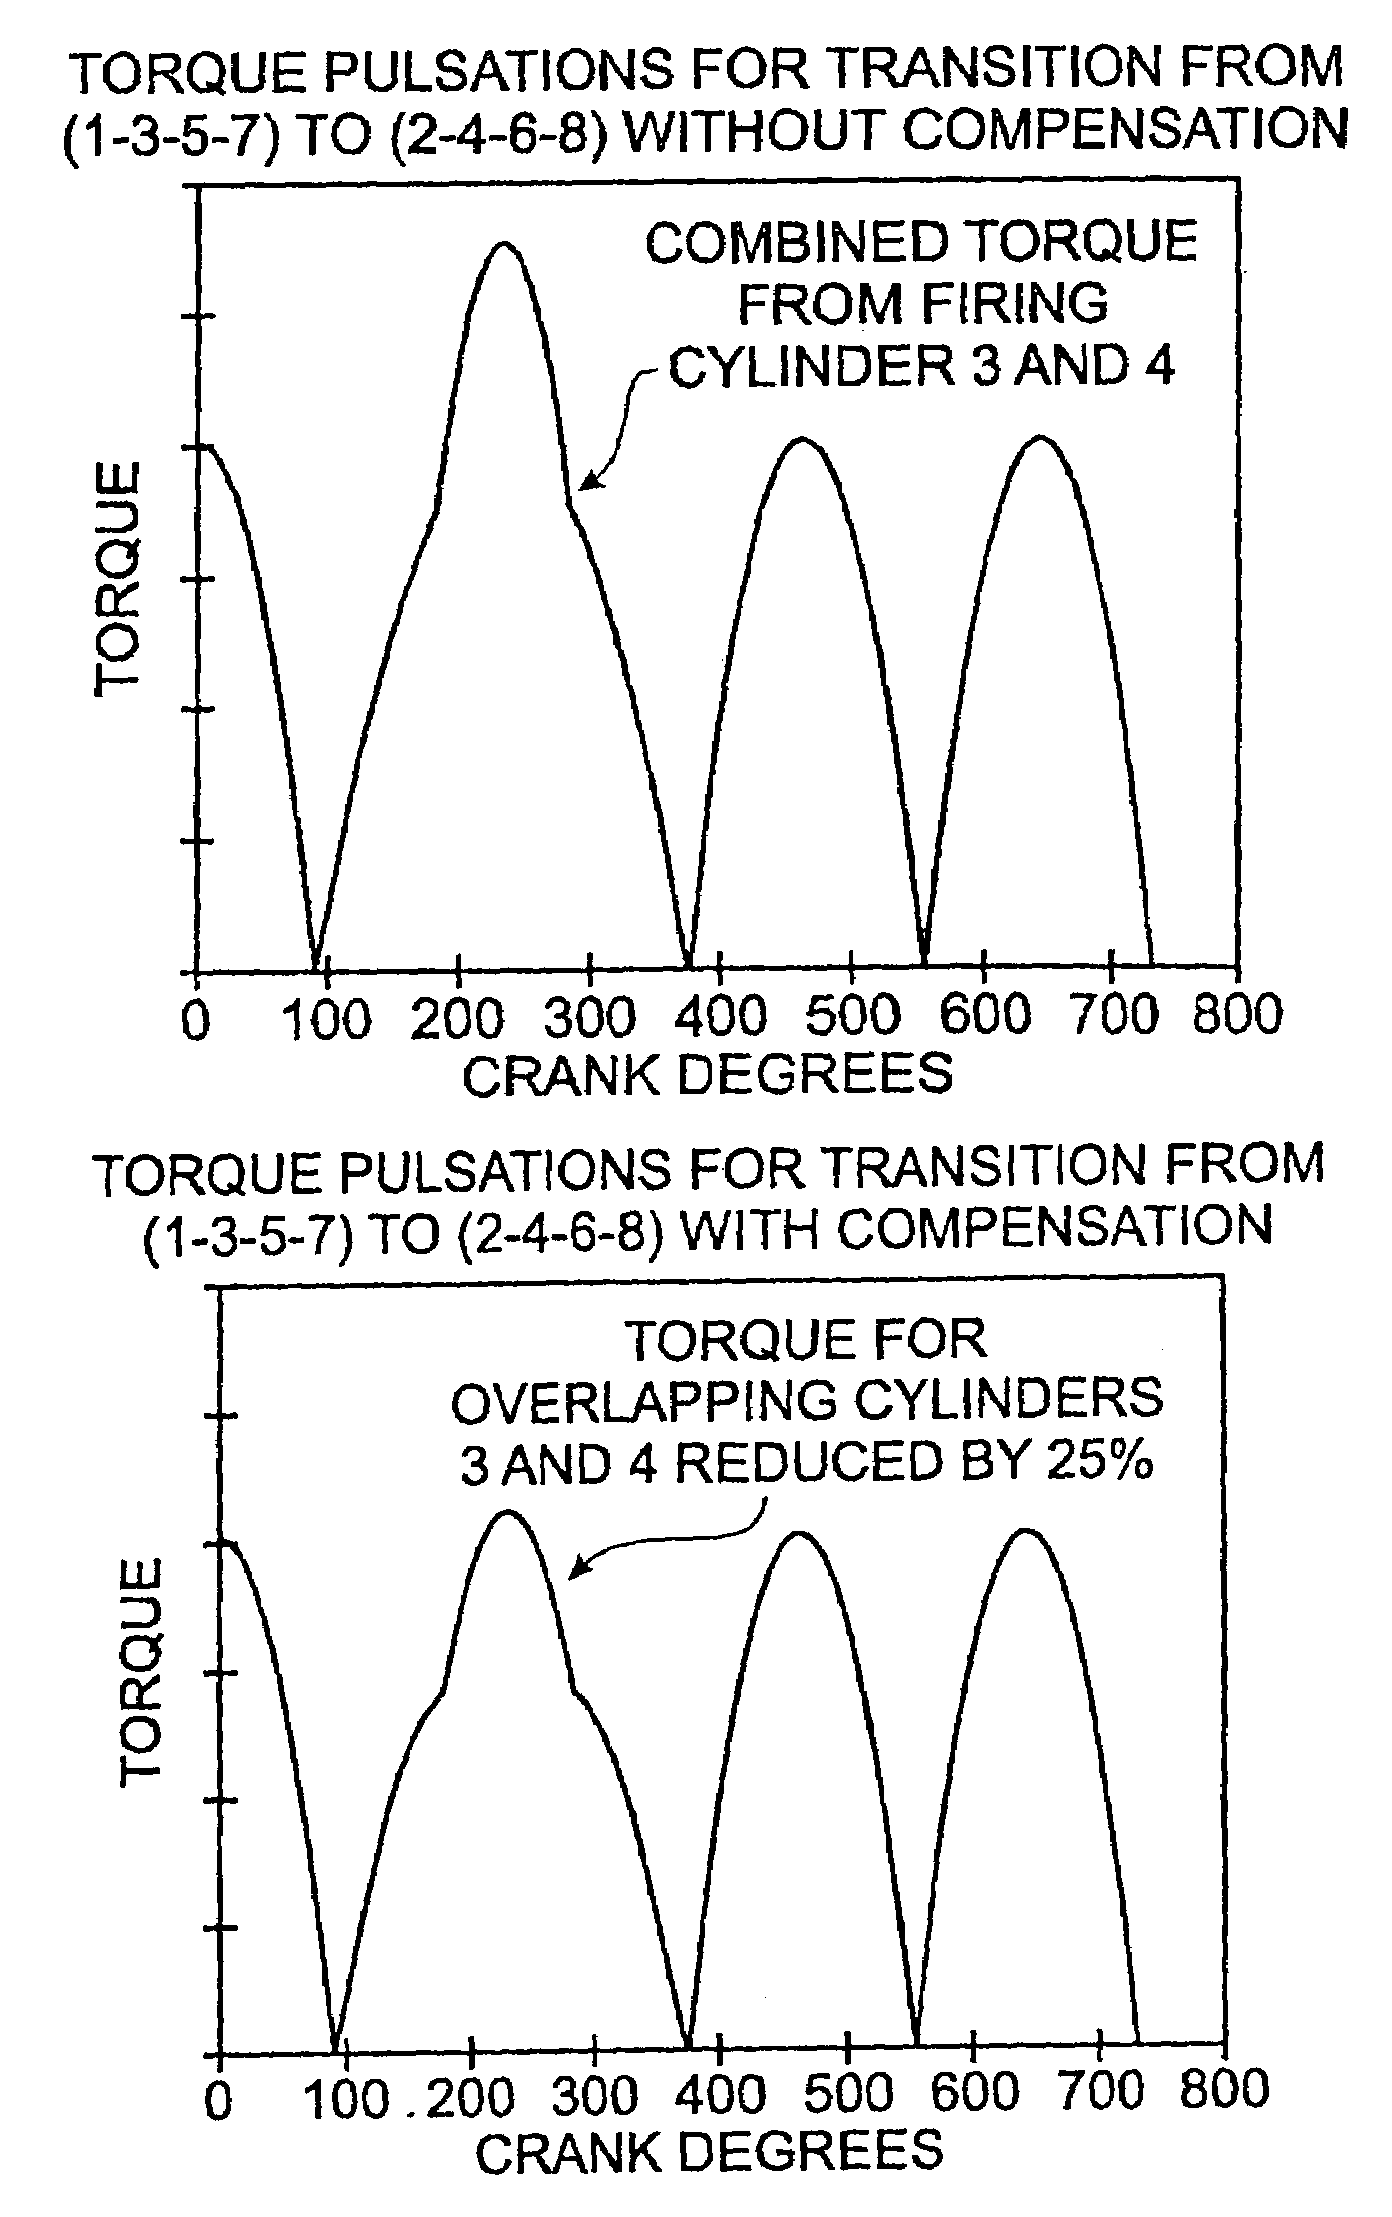 Torque control for engine during cylinder activation or deactivation